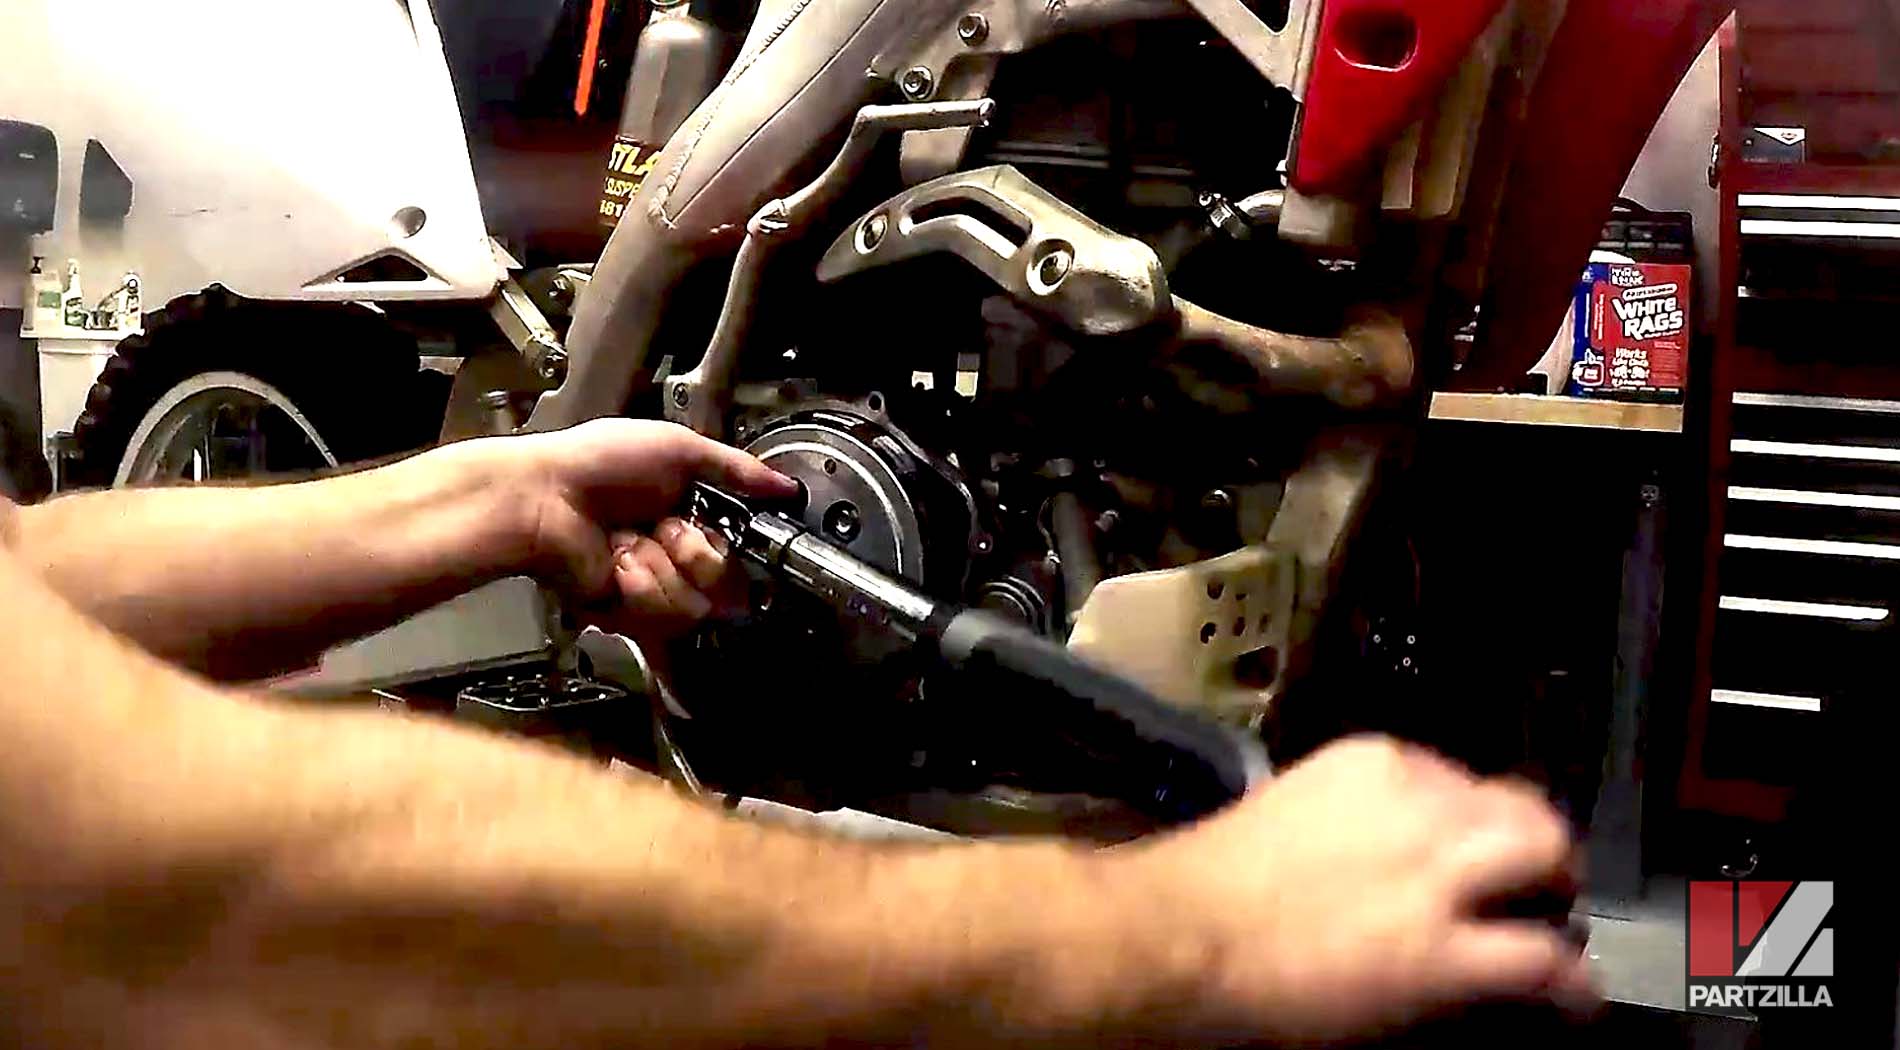 Honda CRF motorcycle clutch spring bolts